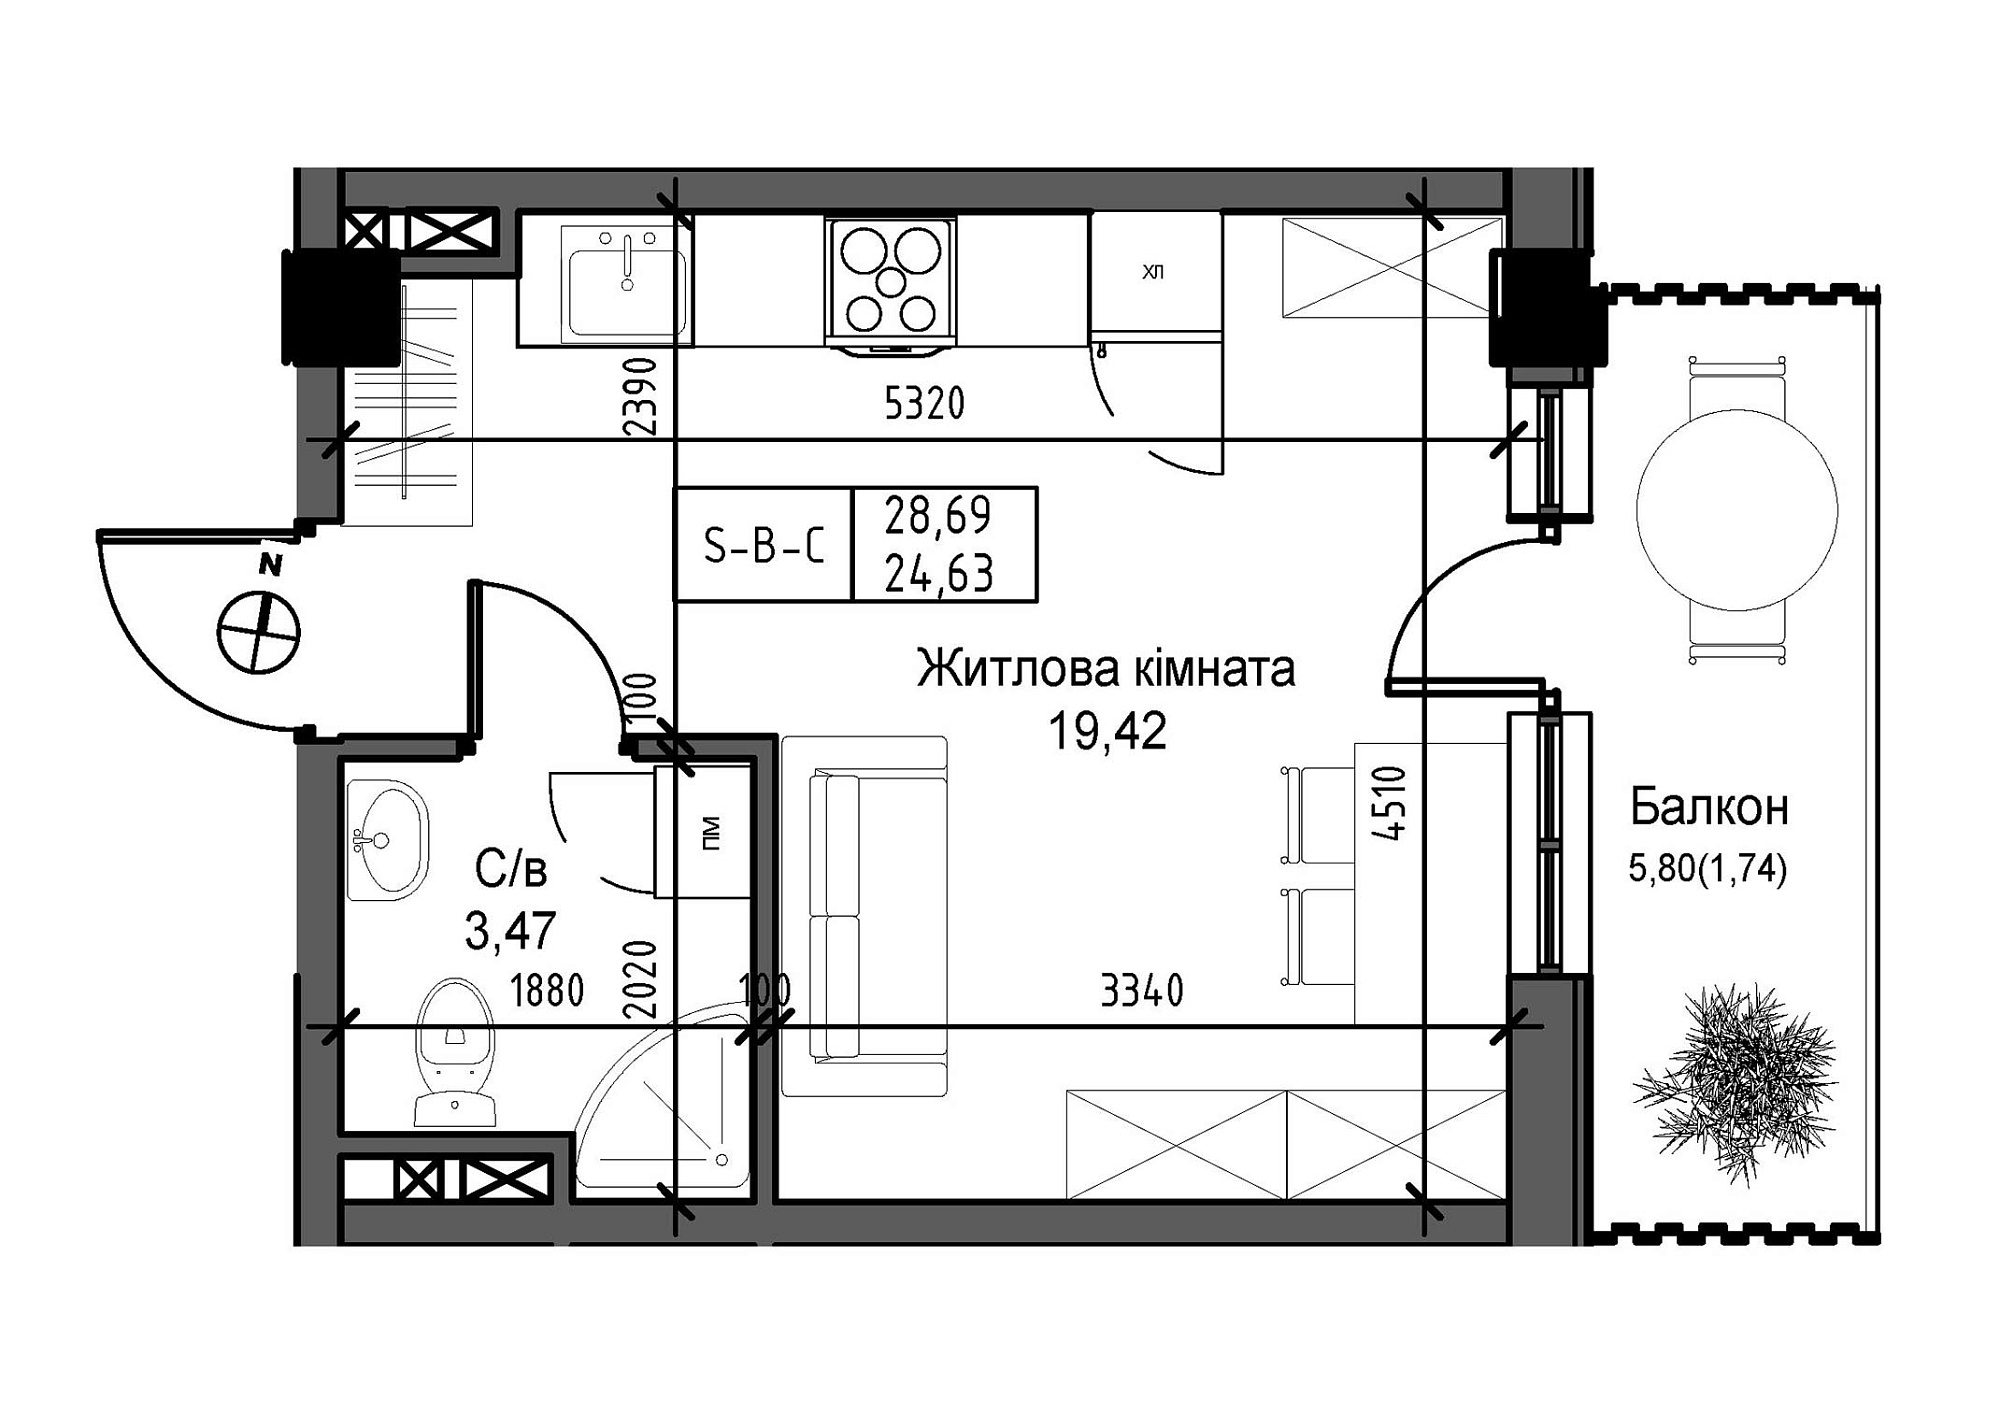 Планування Smart-квартира площею 24.63м2, UM-007-03/0005.